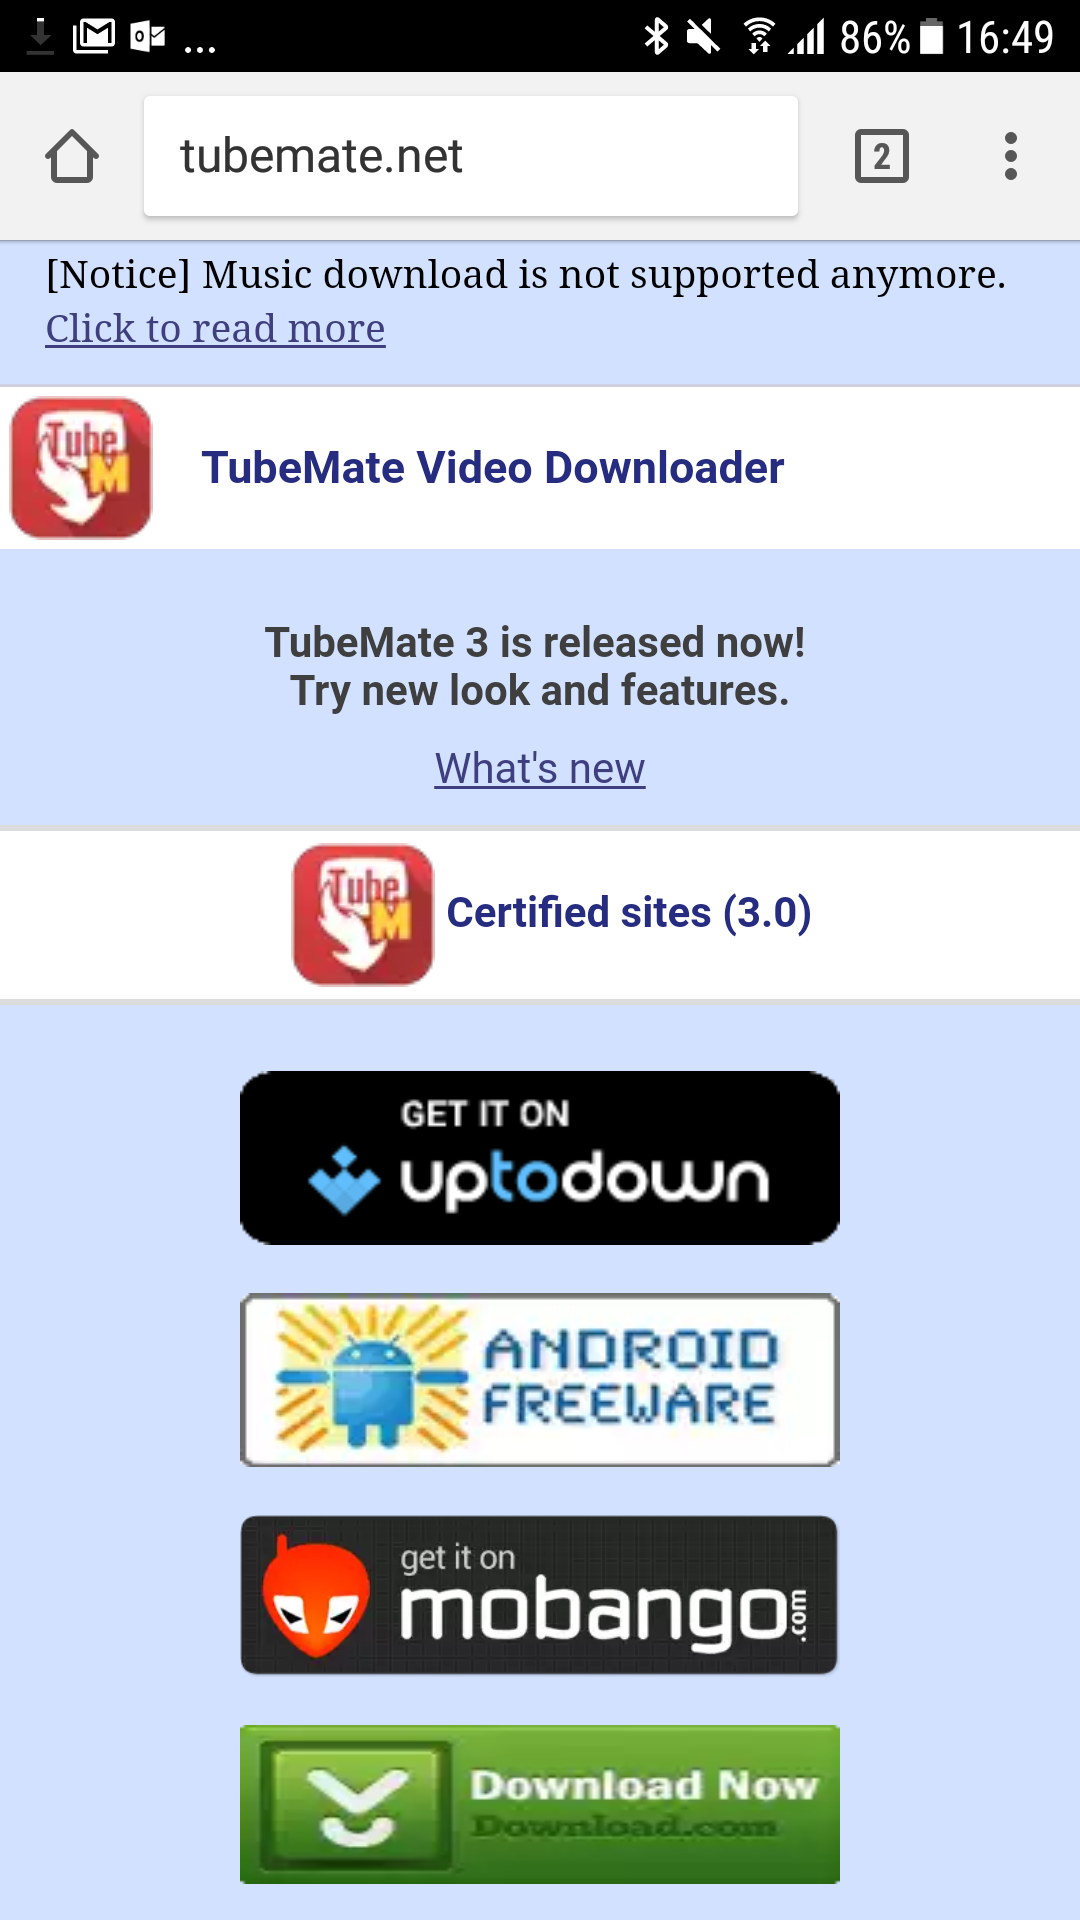 tubemate app download now